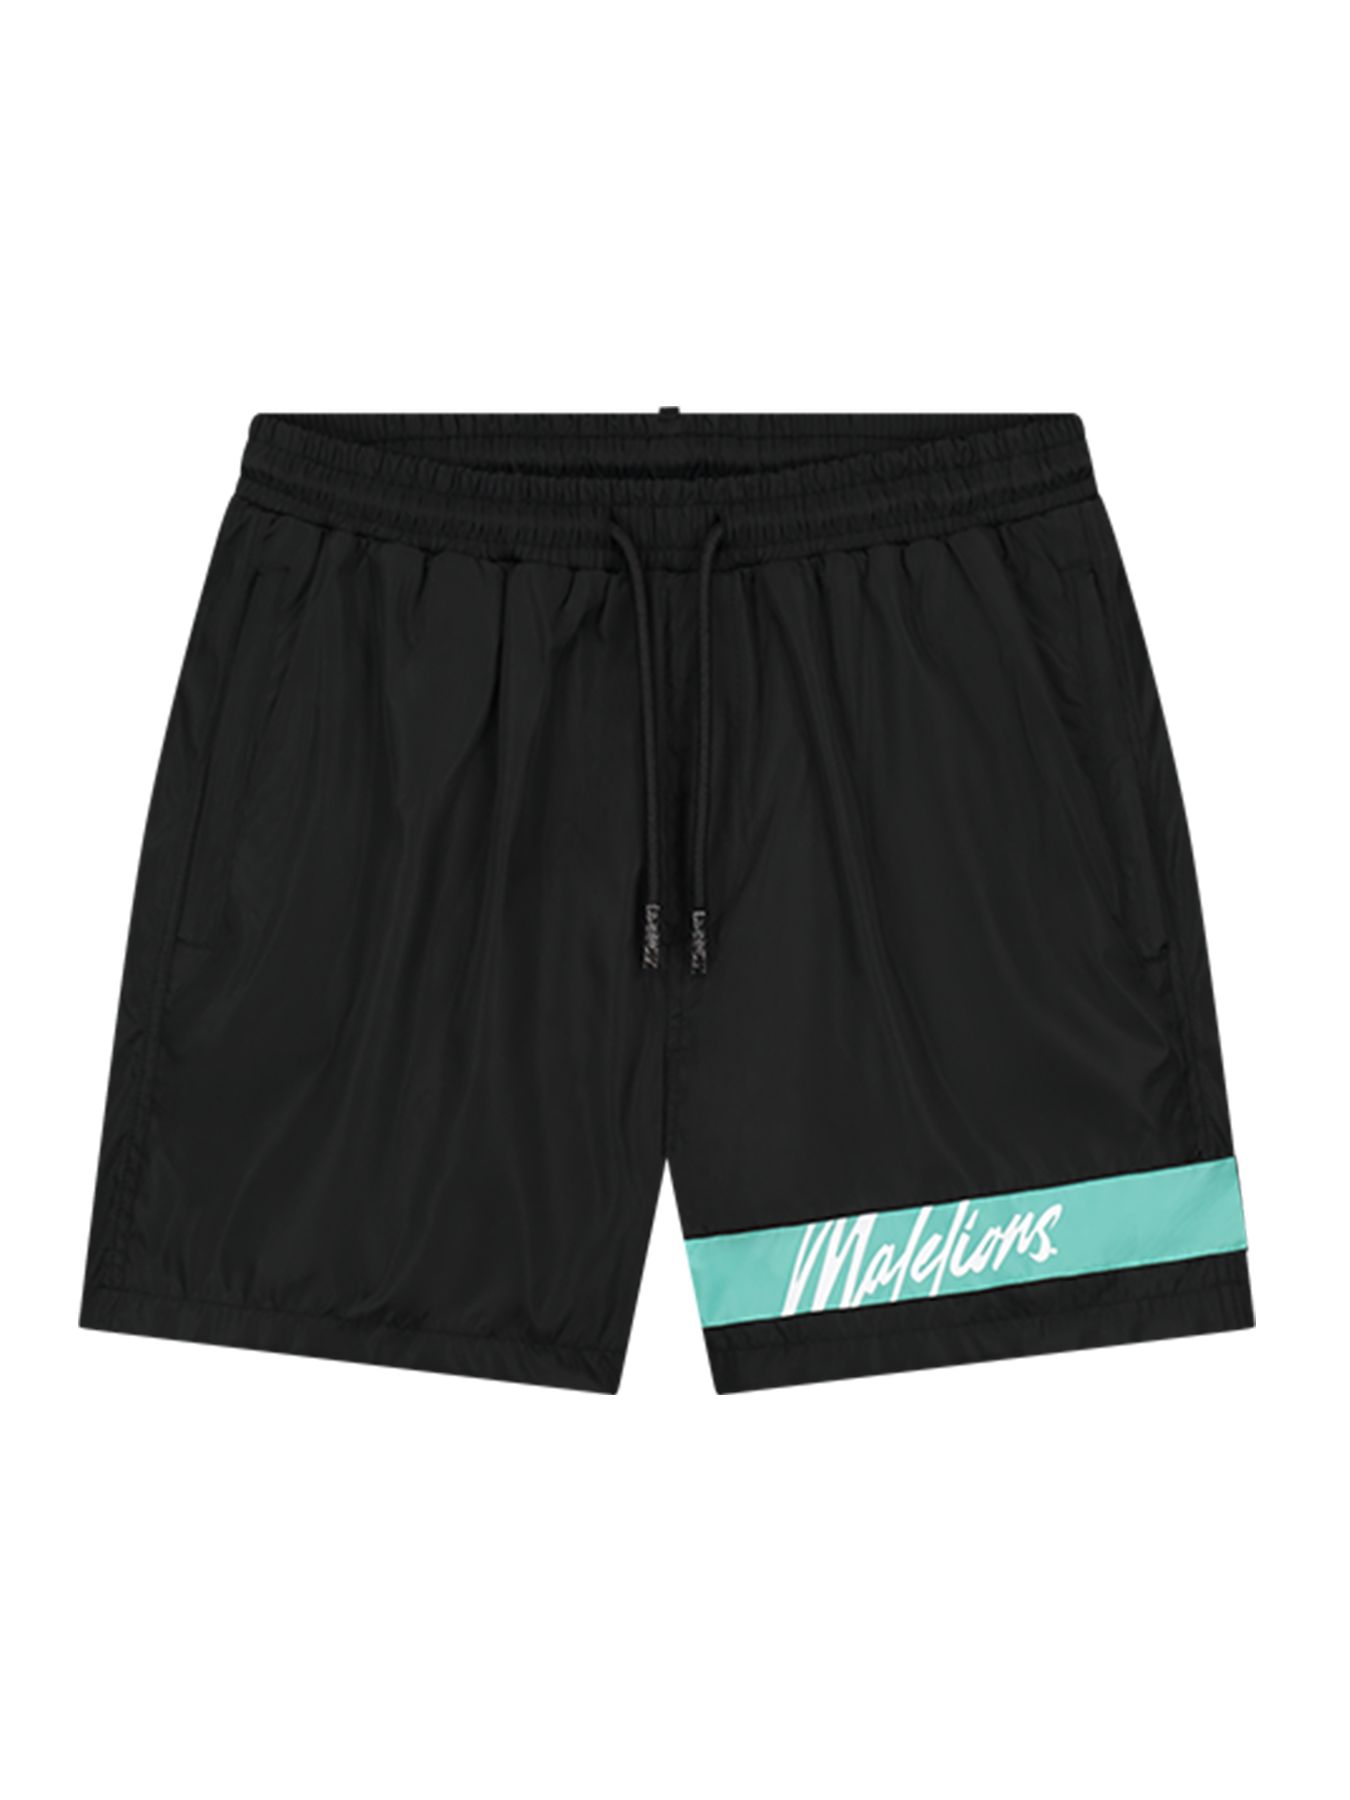 Malelions Men Captain swim shorts Black/Turquoise 00108670-924